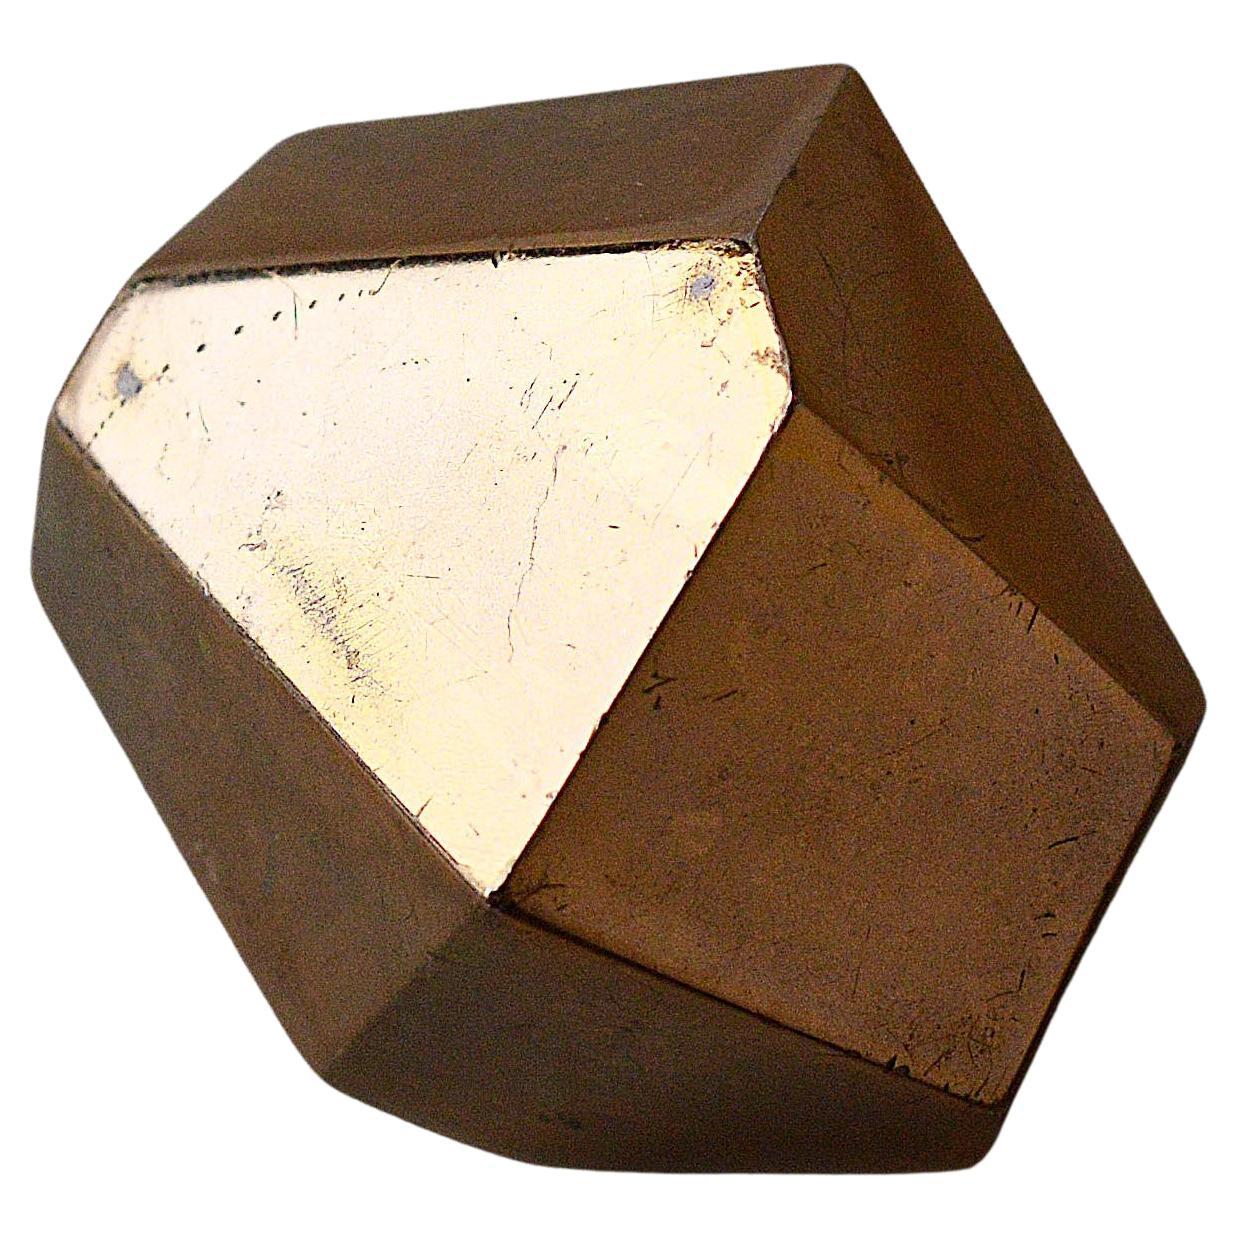 Bronze Diamond Sculpture or Paperweight by Monique Gerber, 1980s